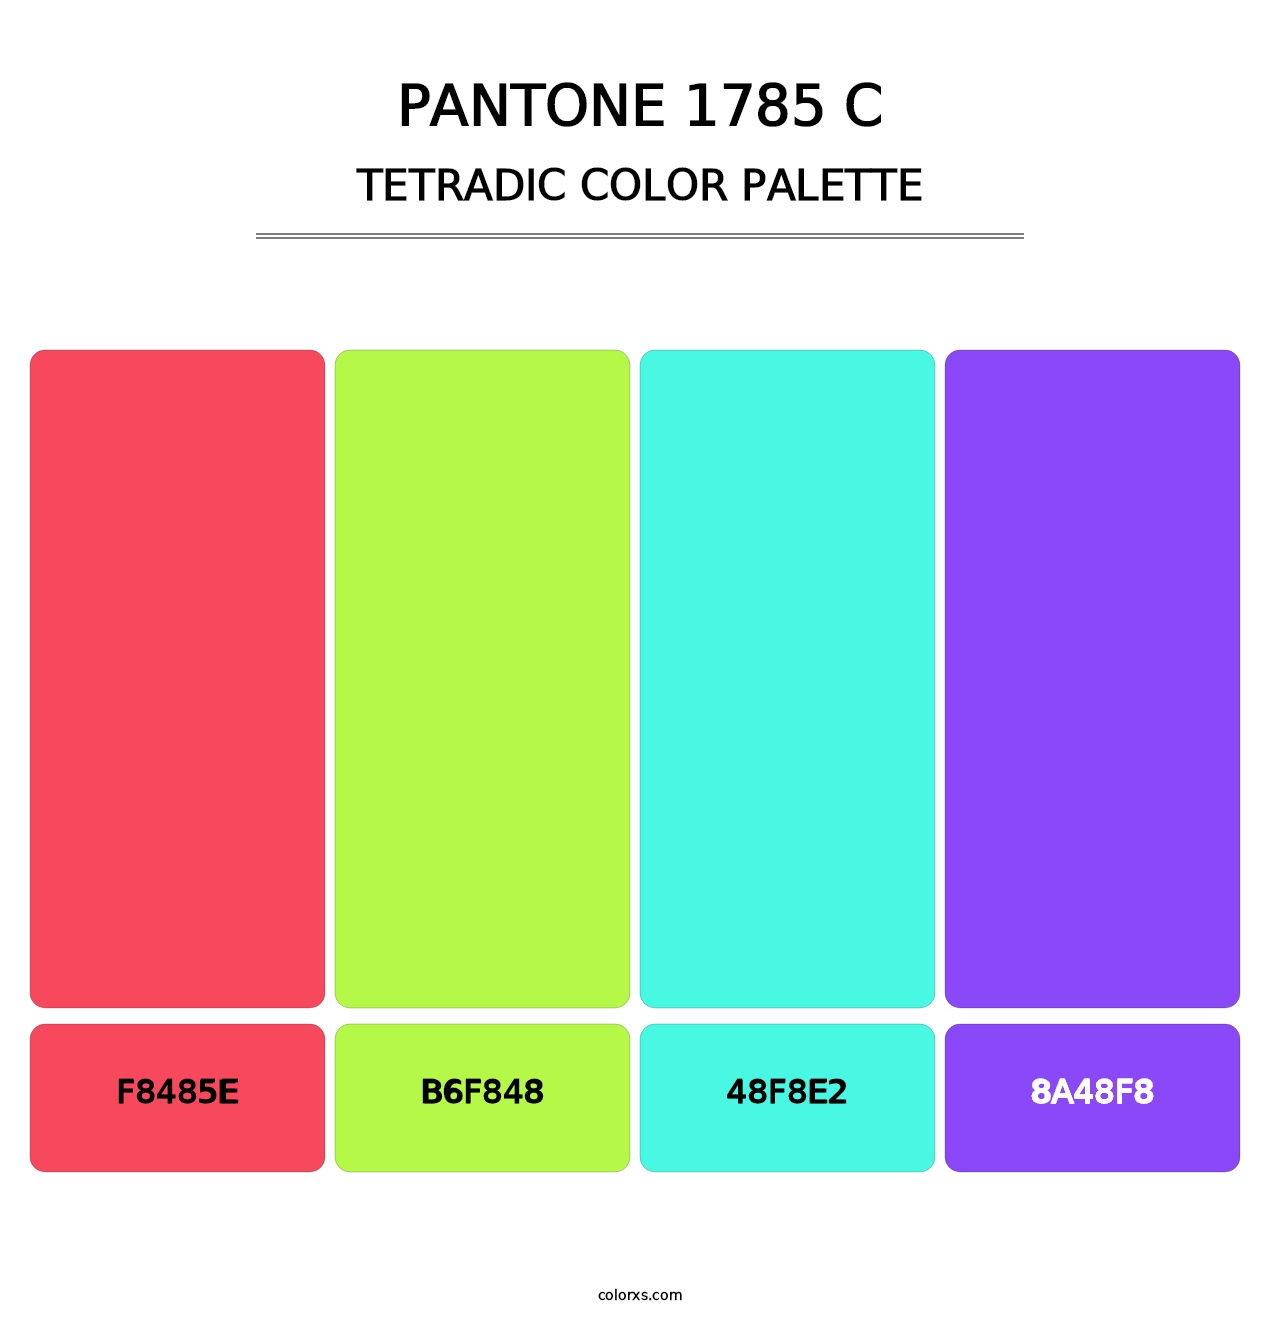 PANTONE 1785 C - Tetradic Color Palette